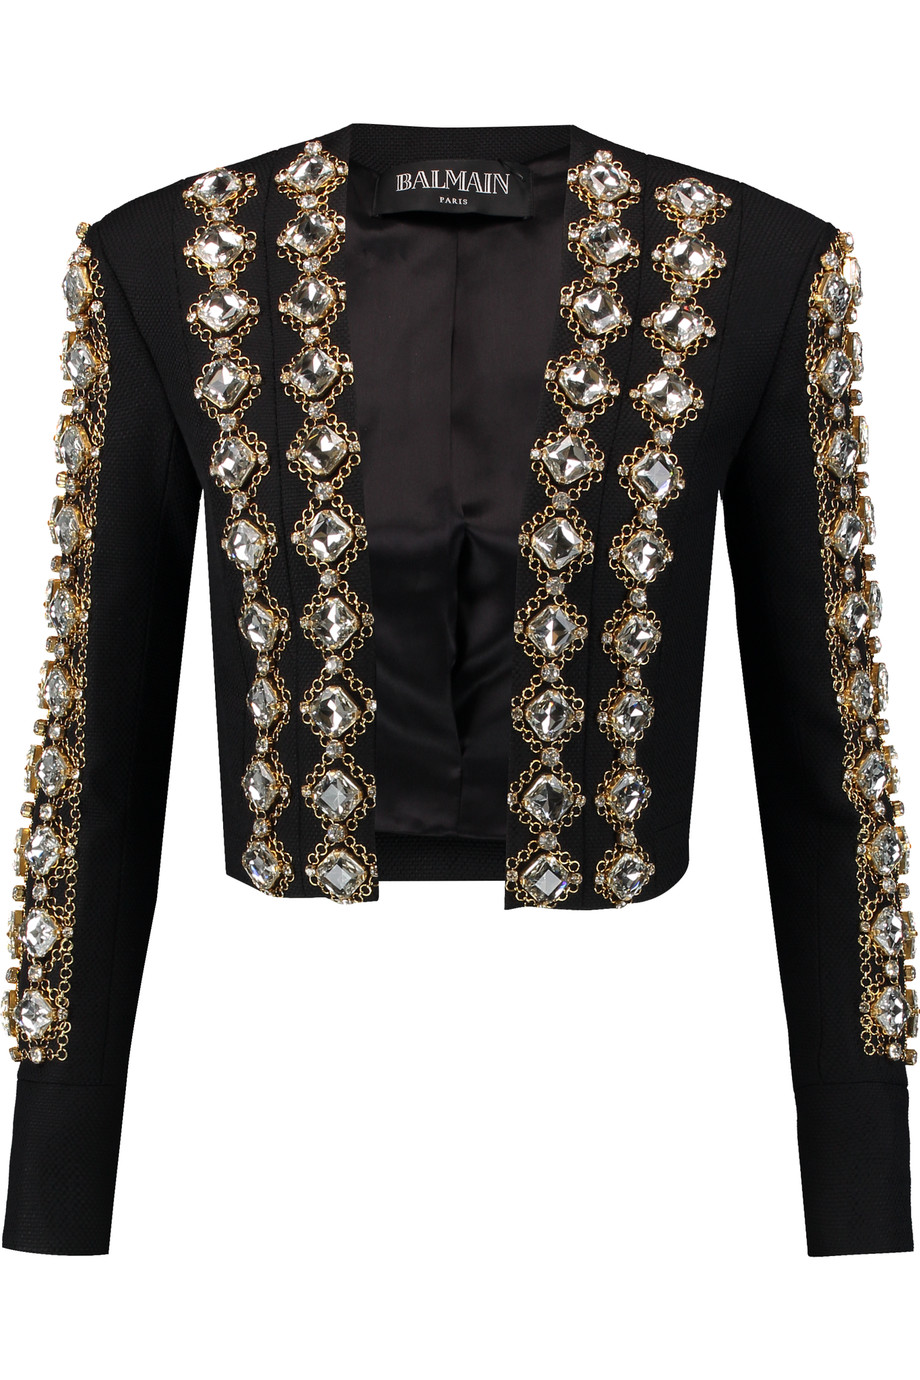 Balmain Embellished Piqué Jacket | ModeSens